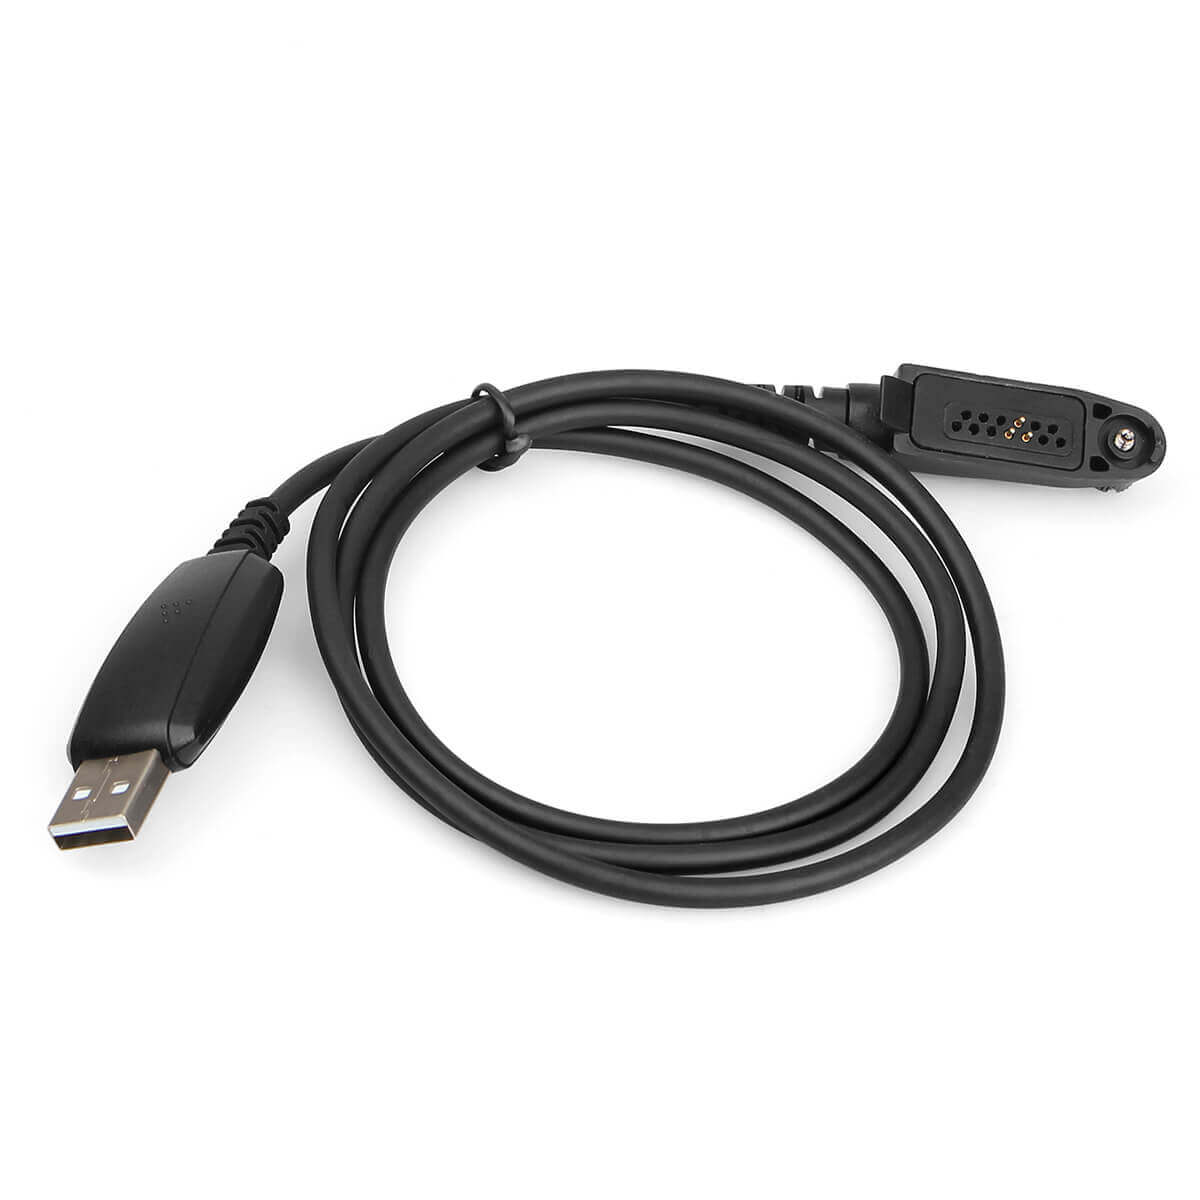 Original USB Programming Cable for Retevis RT87